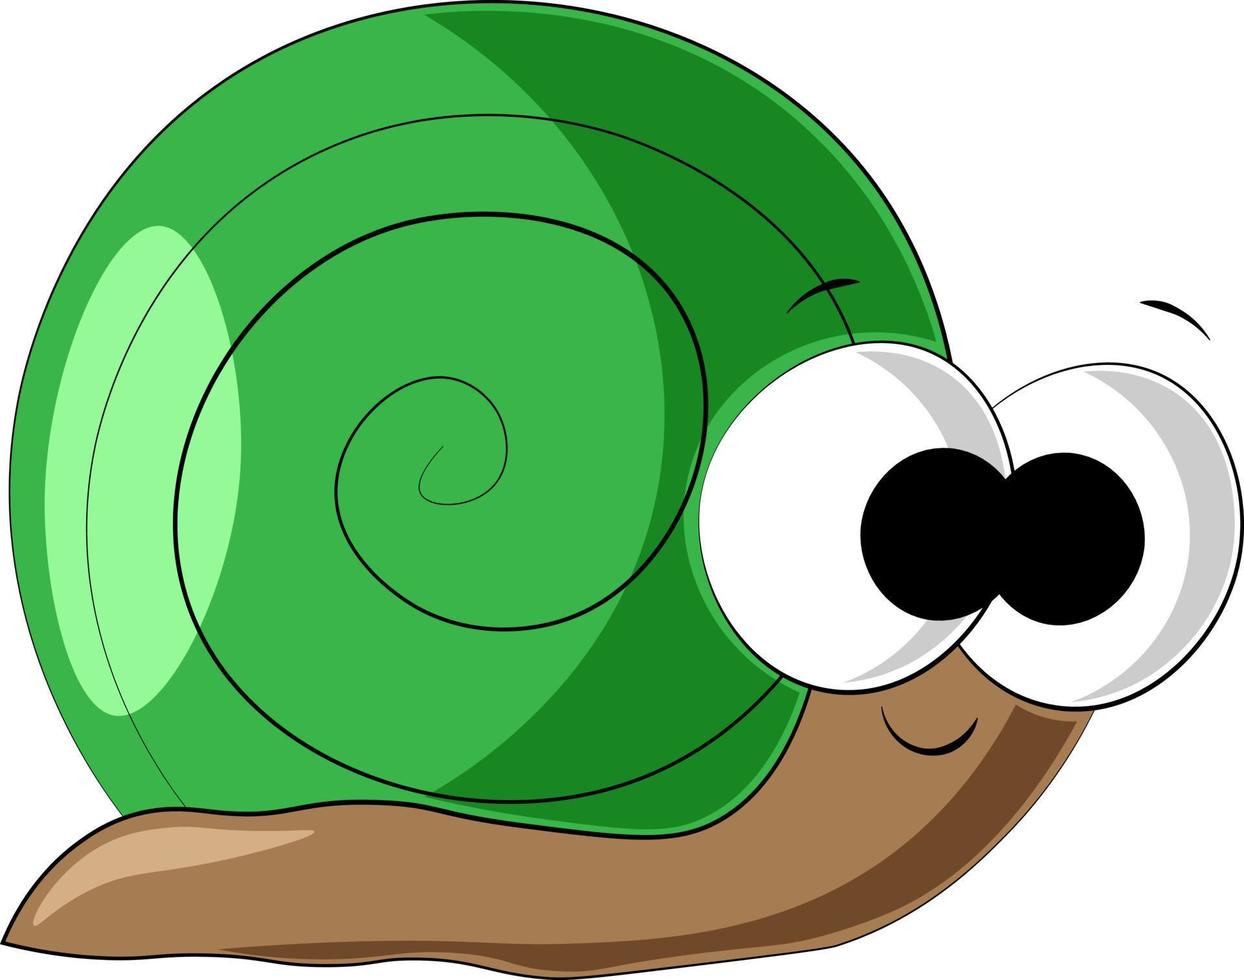 Cute cartoon Snail. Draw illustration in color vector